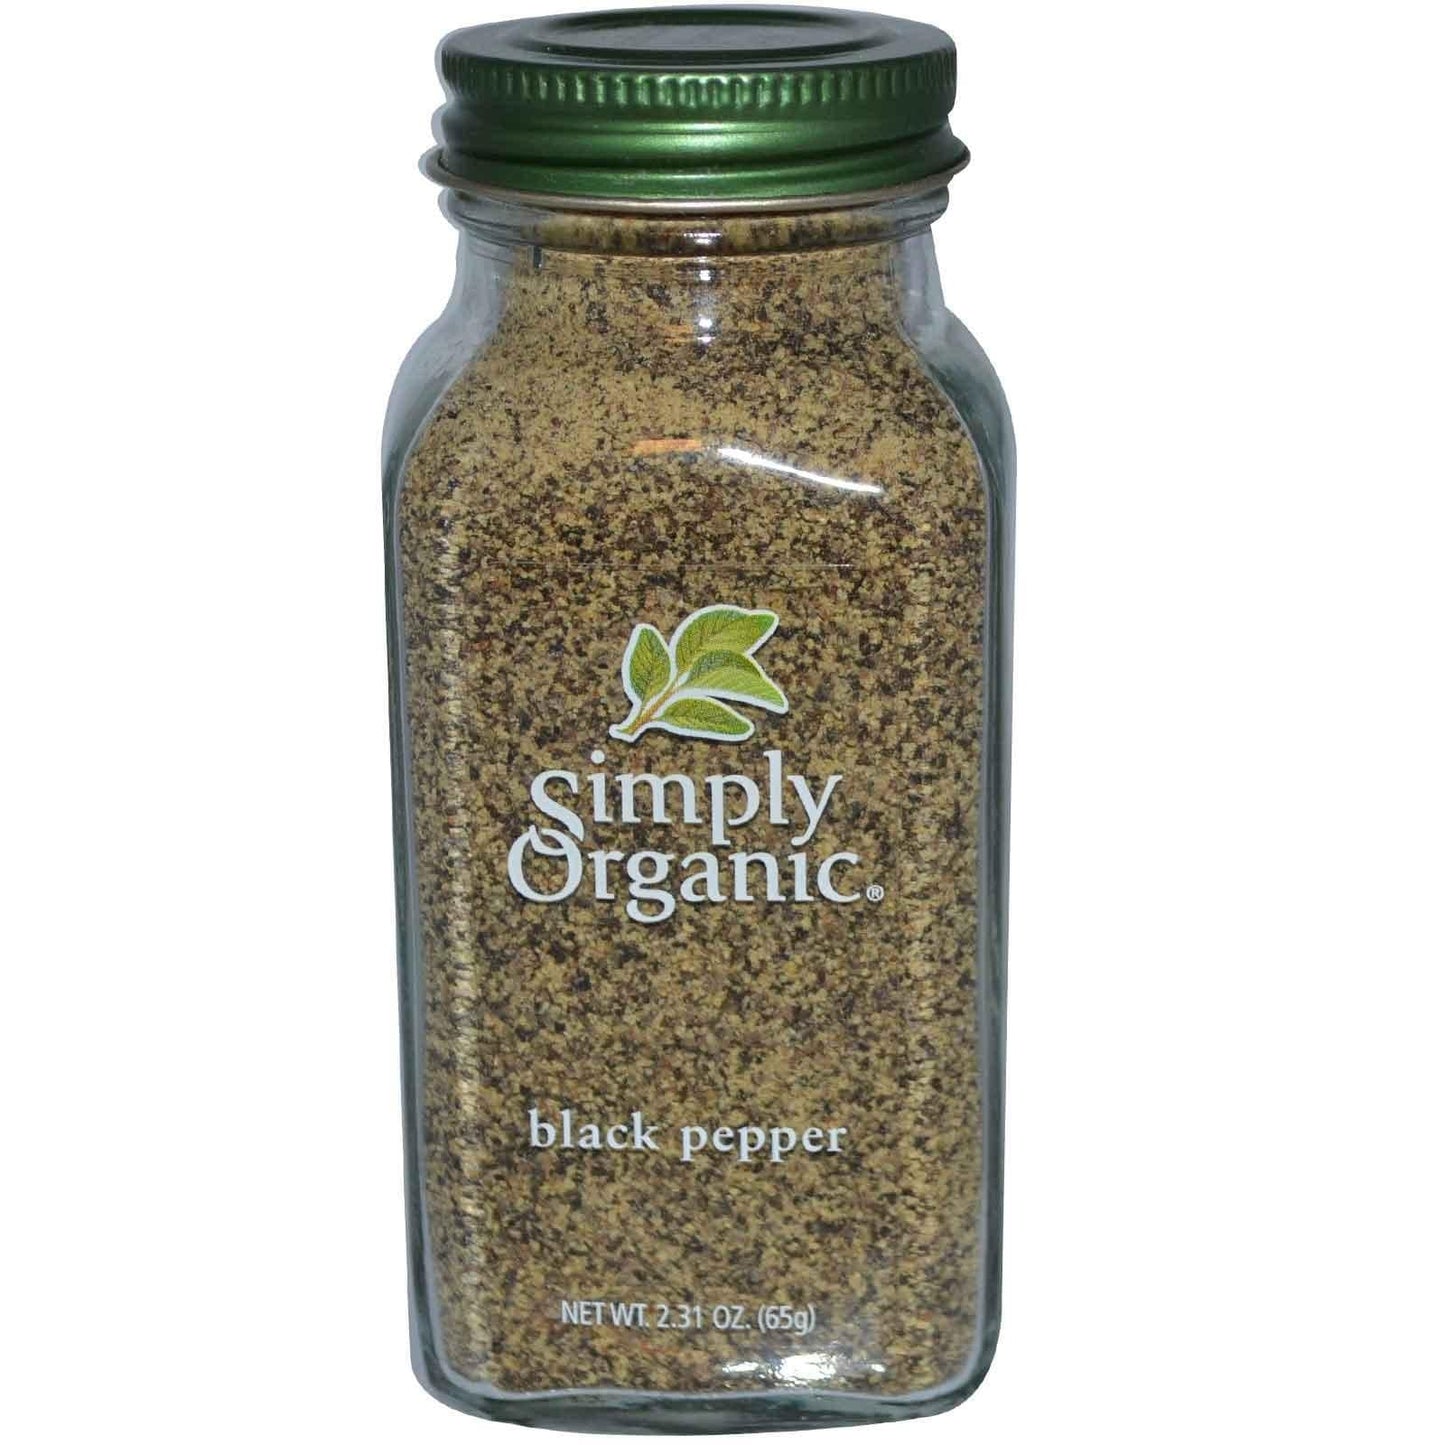 Simply Organic - Black Pepper (Organic) 2.31 oz.